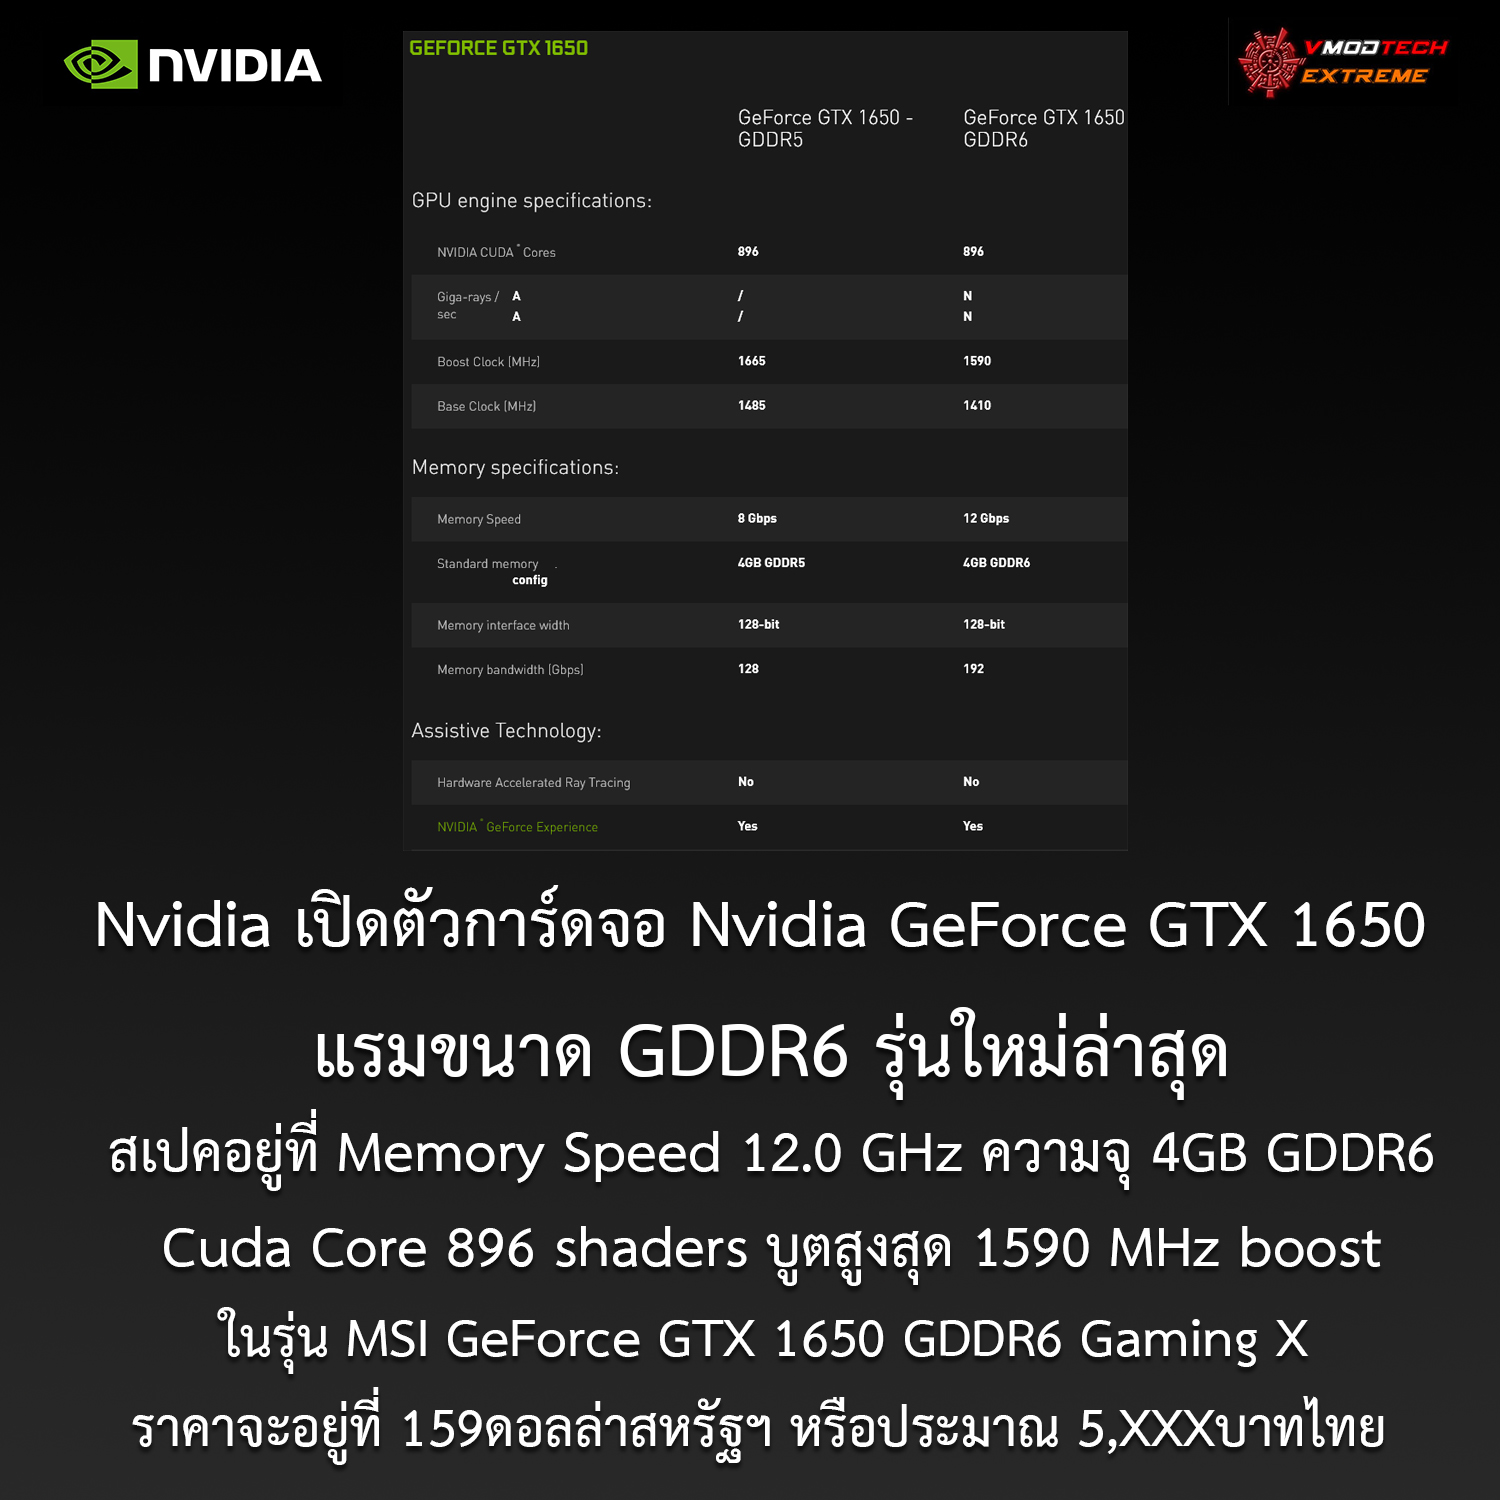 gtx 1650 gddr6 Nvidia เปิดตัวการ์ดจอ Nvidia GeForce GTX 1650 มาพร้อมแรมขนาด GDDR6 รุ่นใหม่ล่าสุด